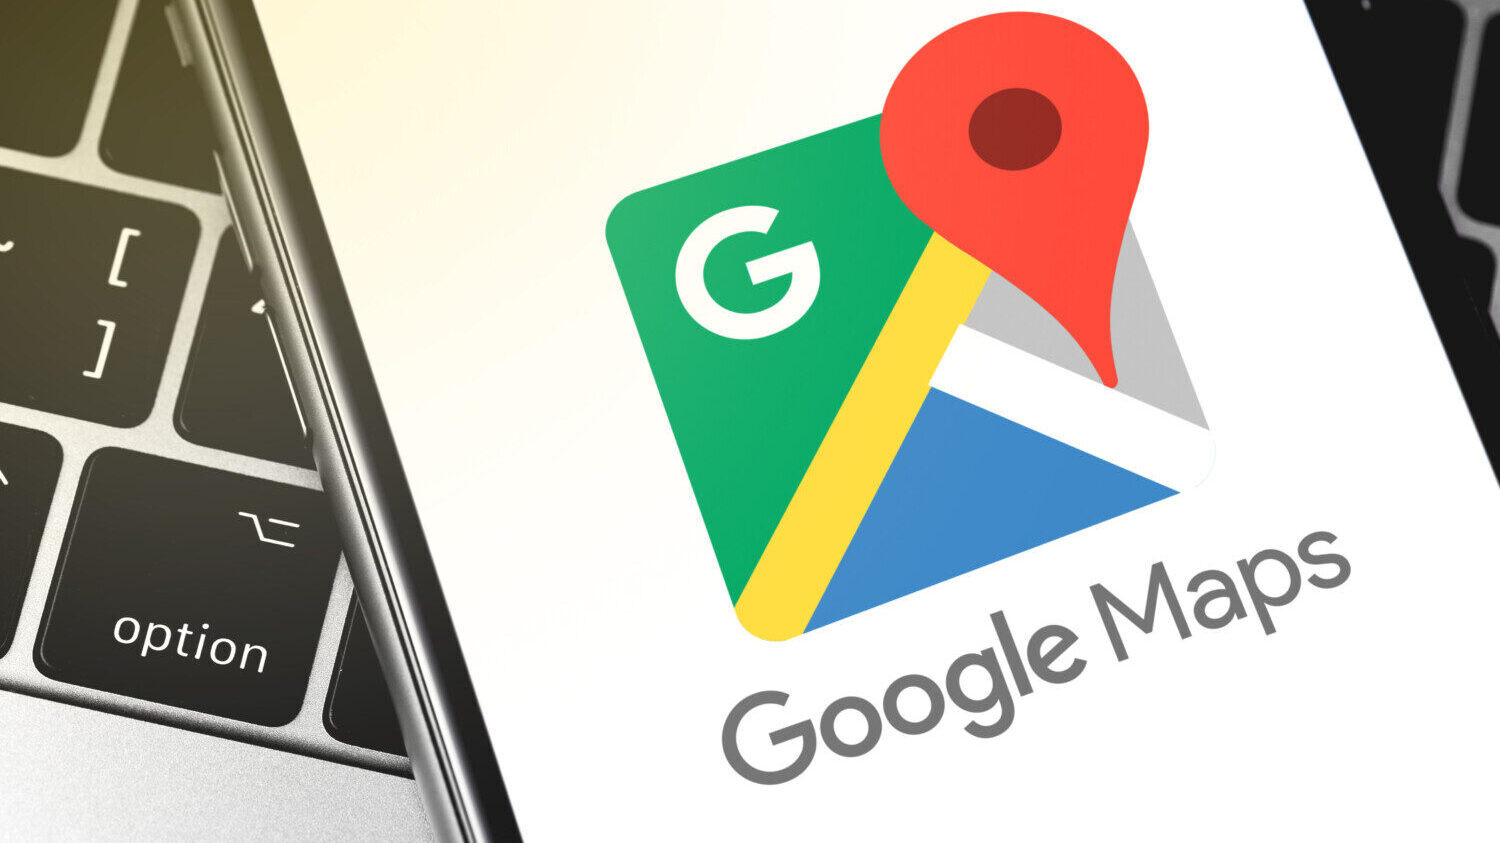 Google Maps app logo on smartphone